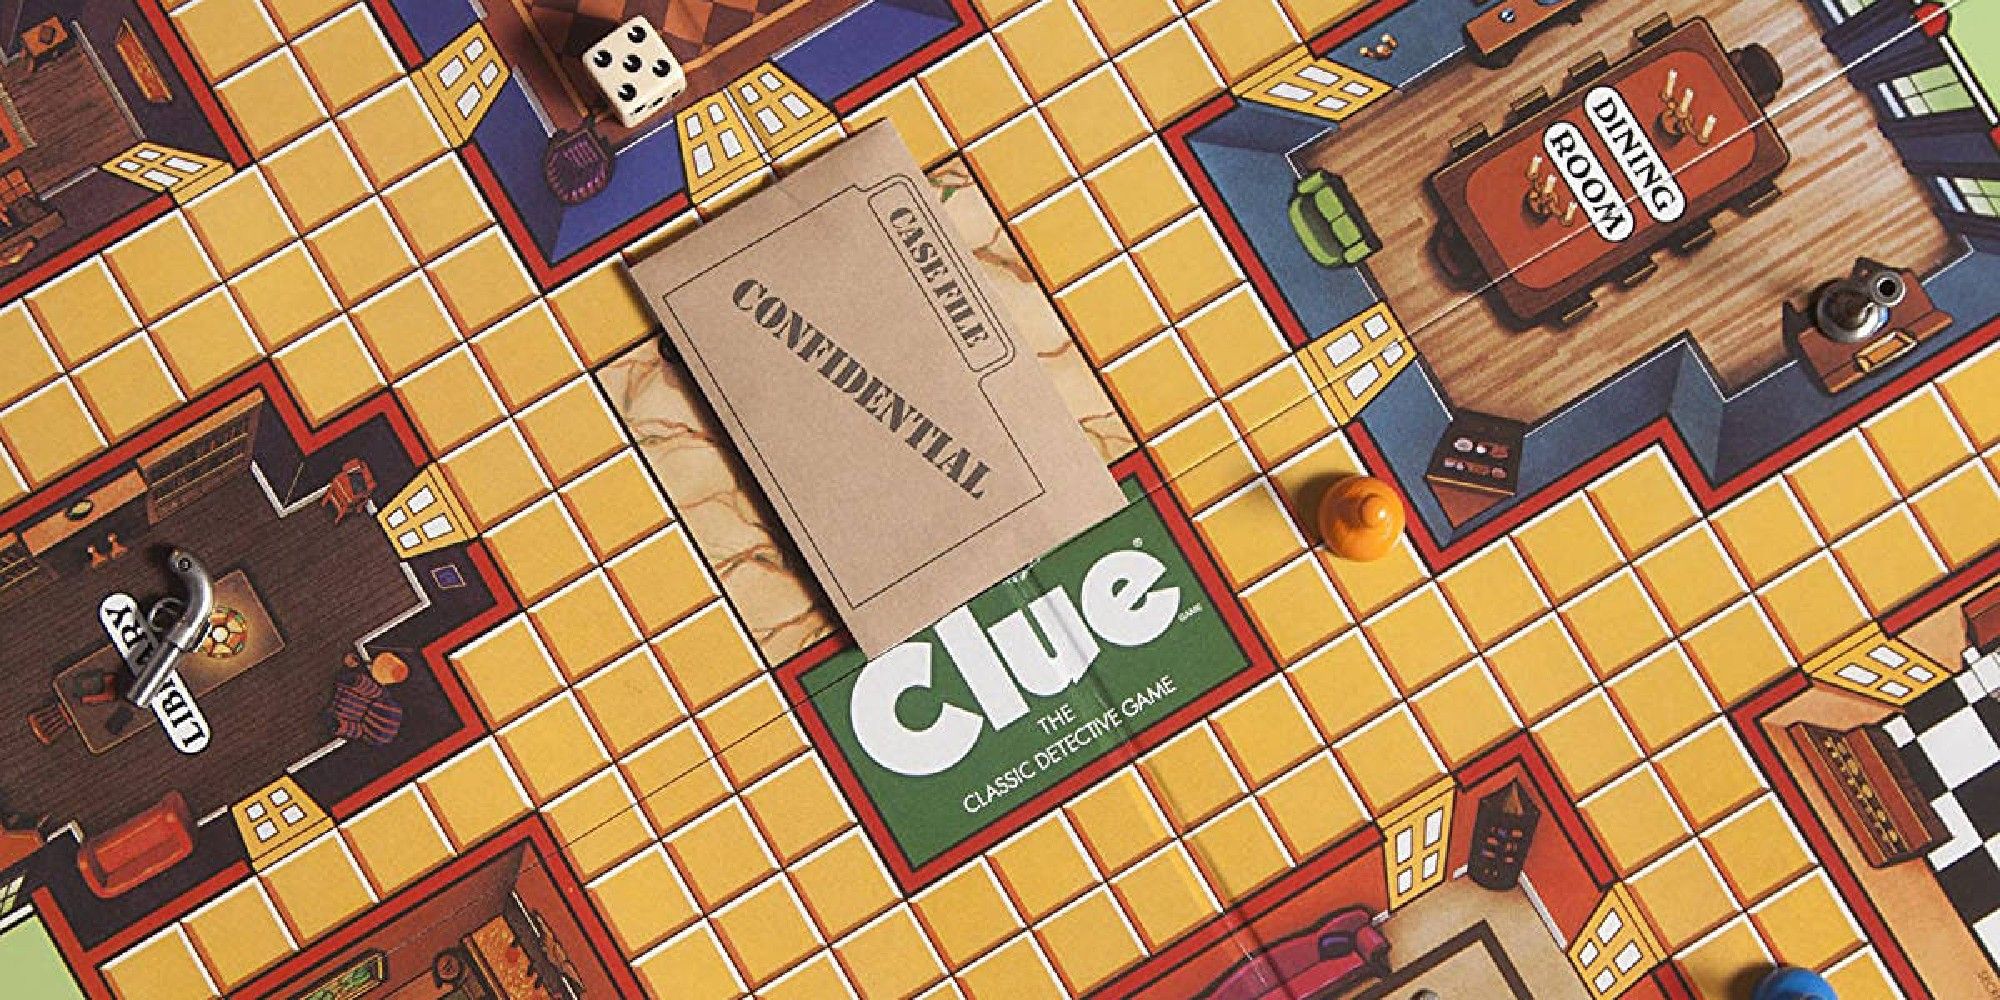 The Clue Board